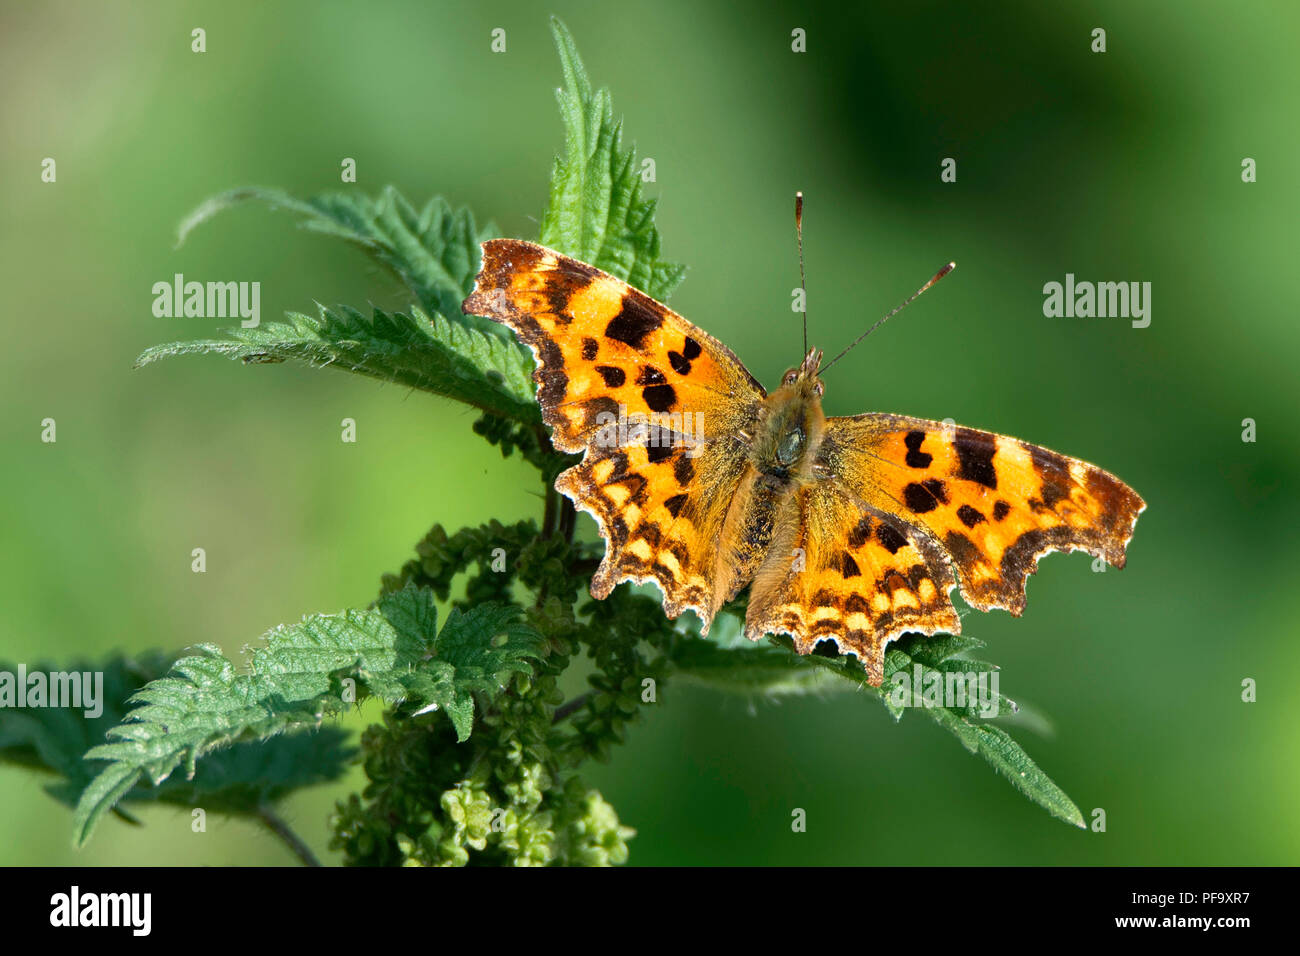 Comma butterfly on nettle plant Stock Photo